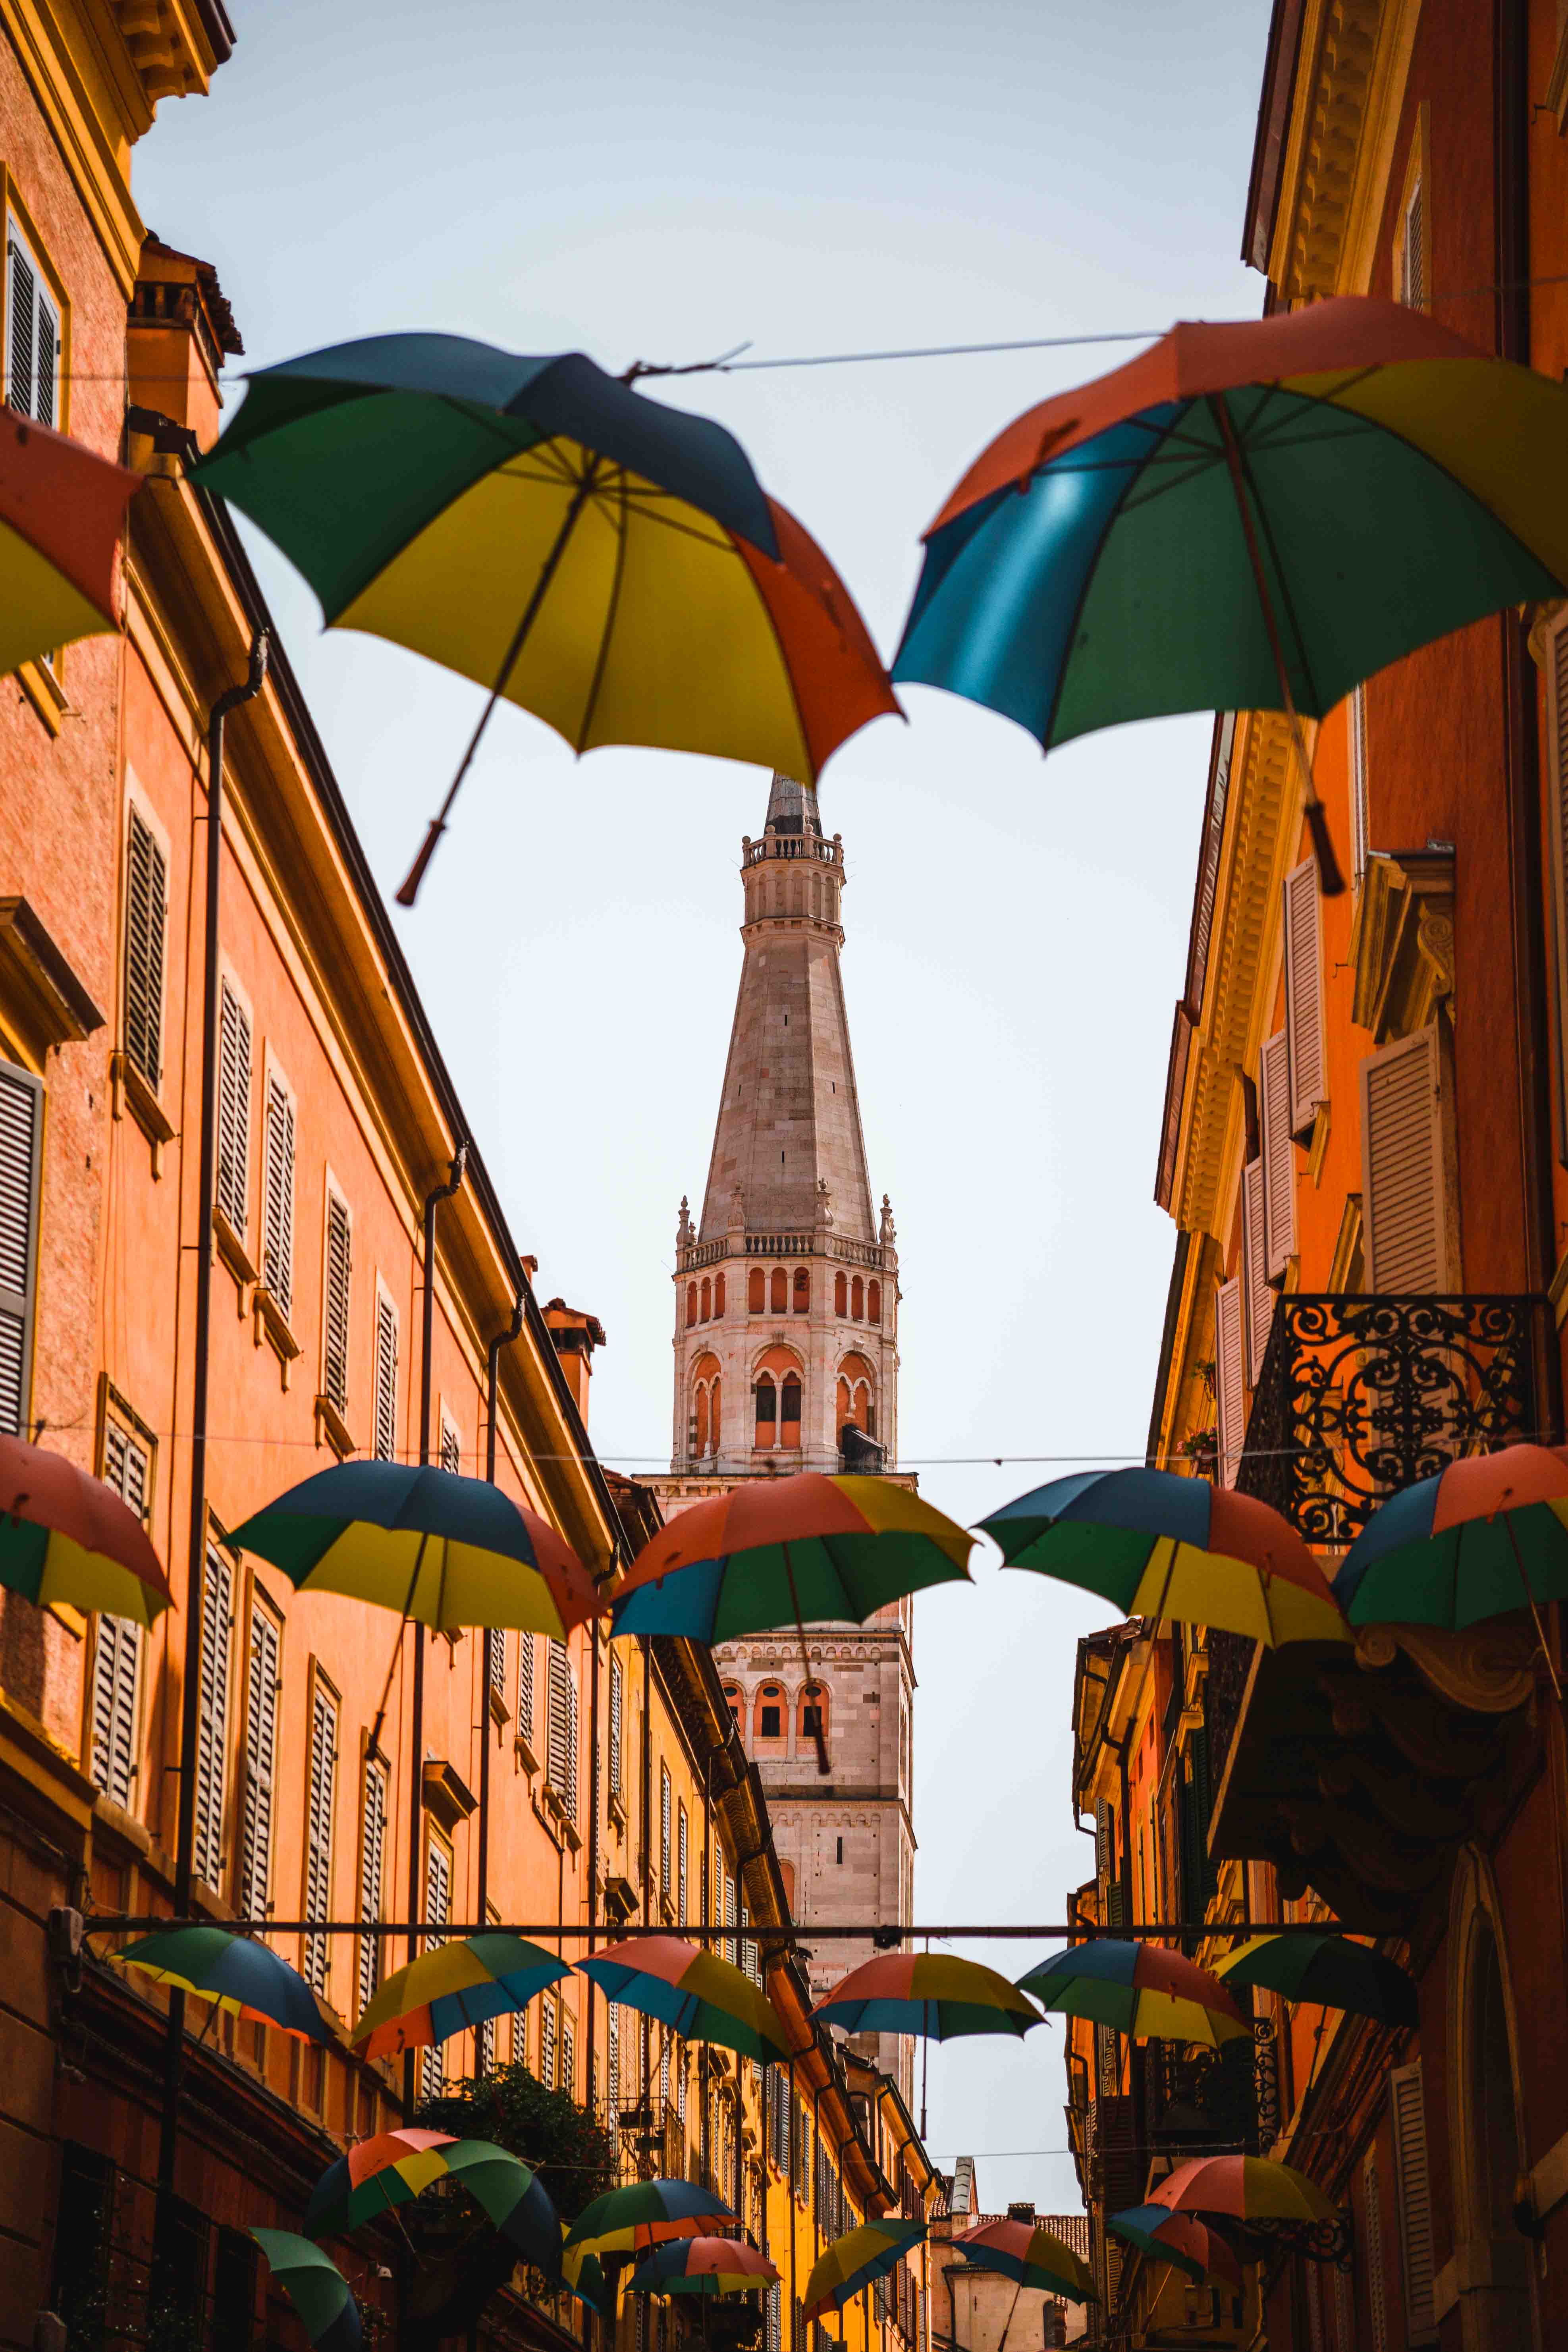 Unbrellas hung up in Modena, Italy